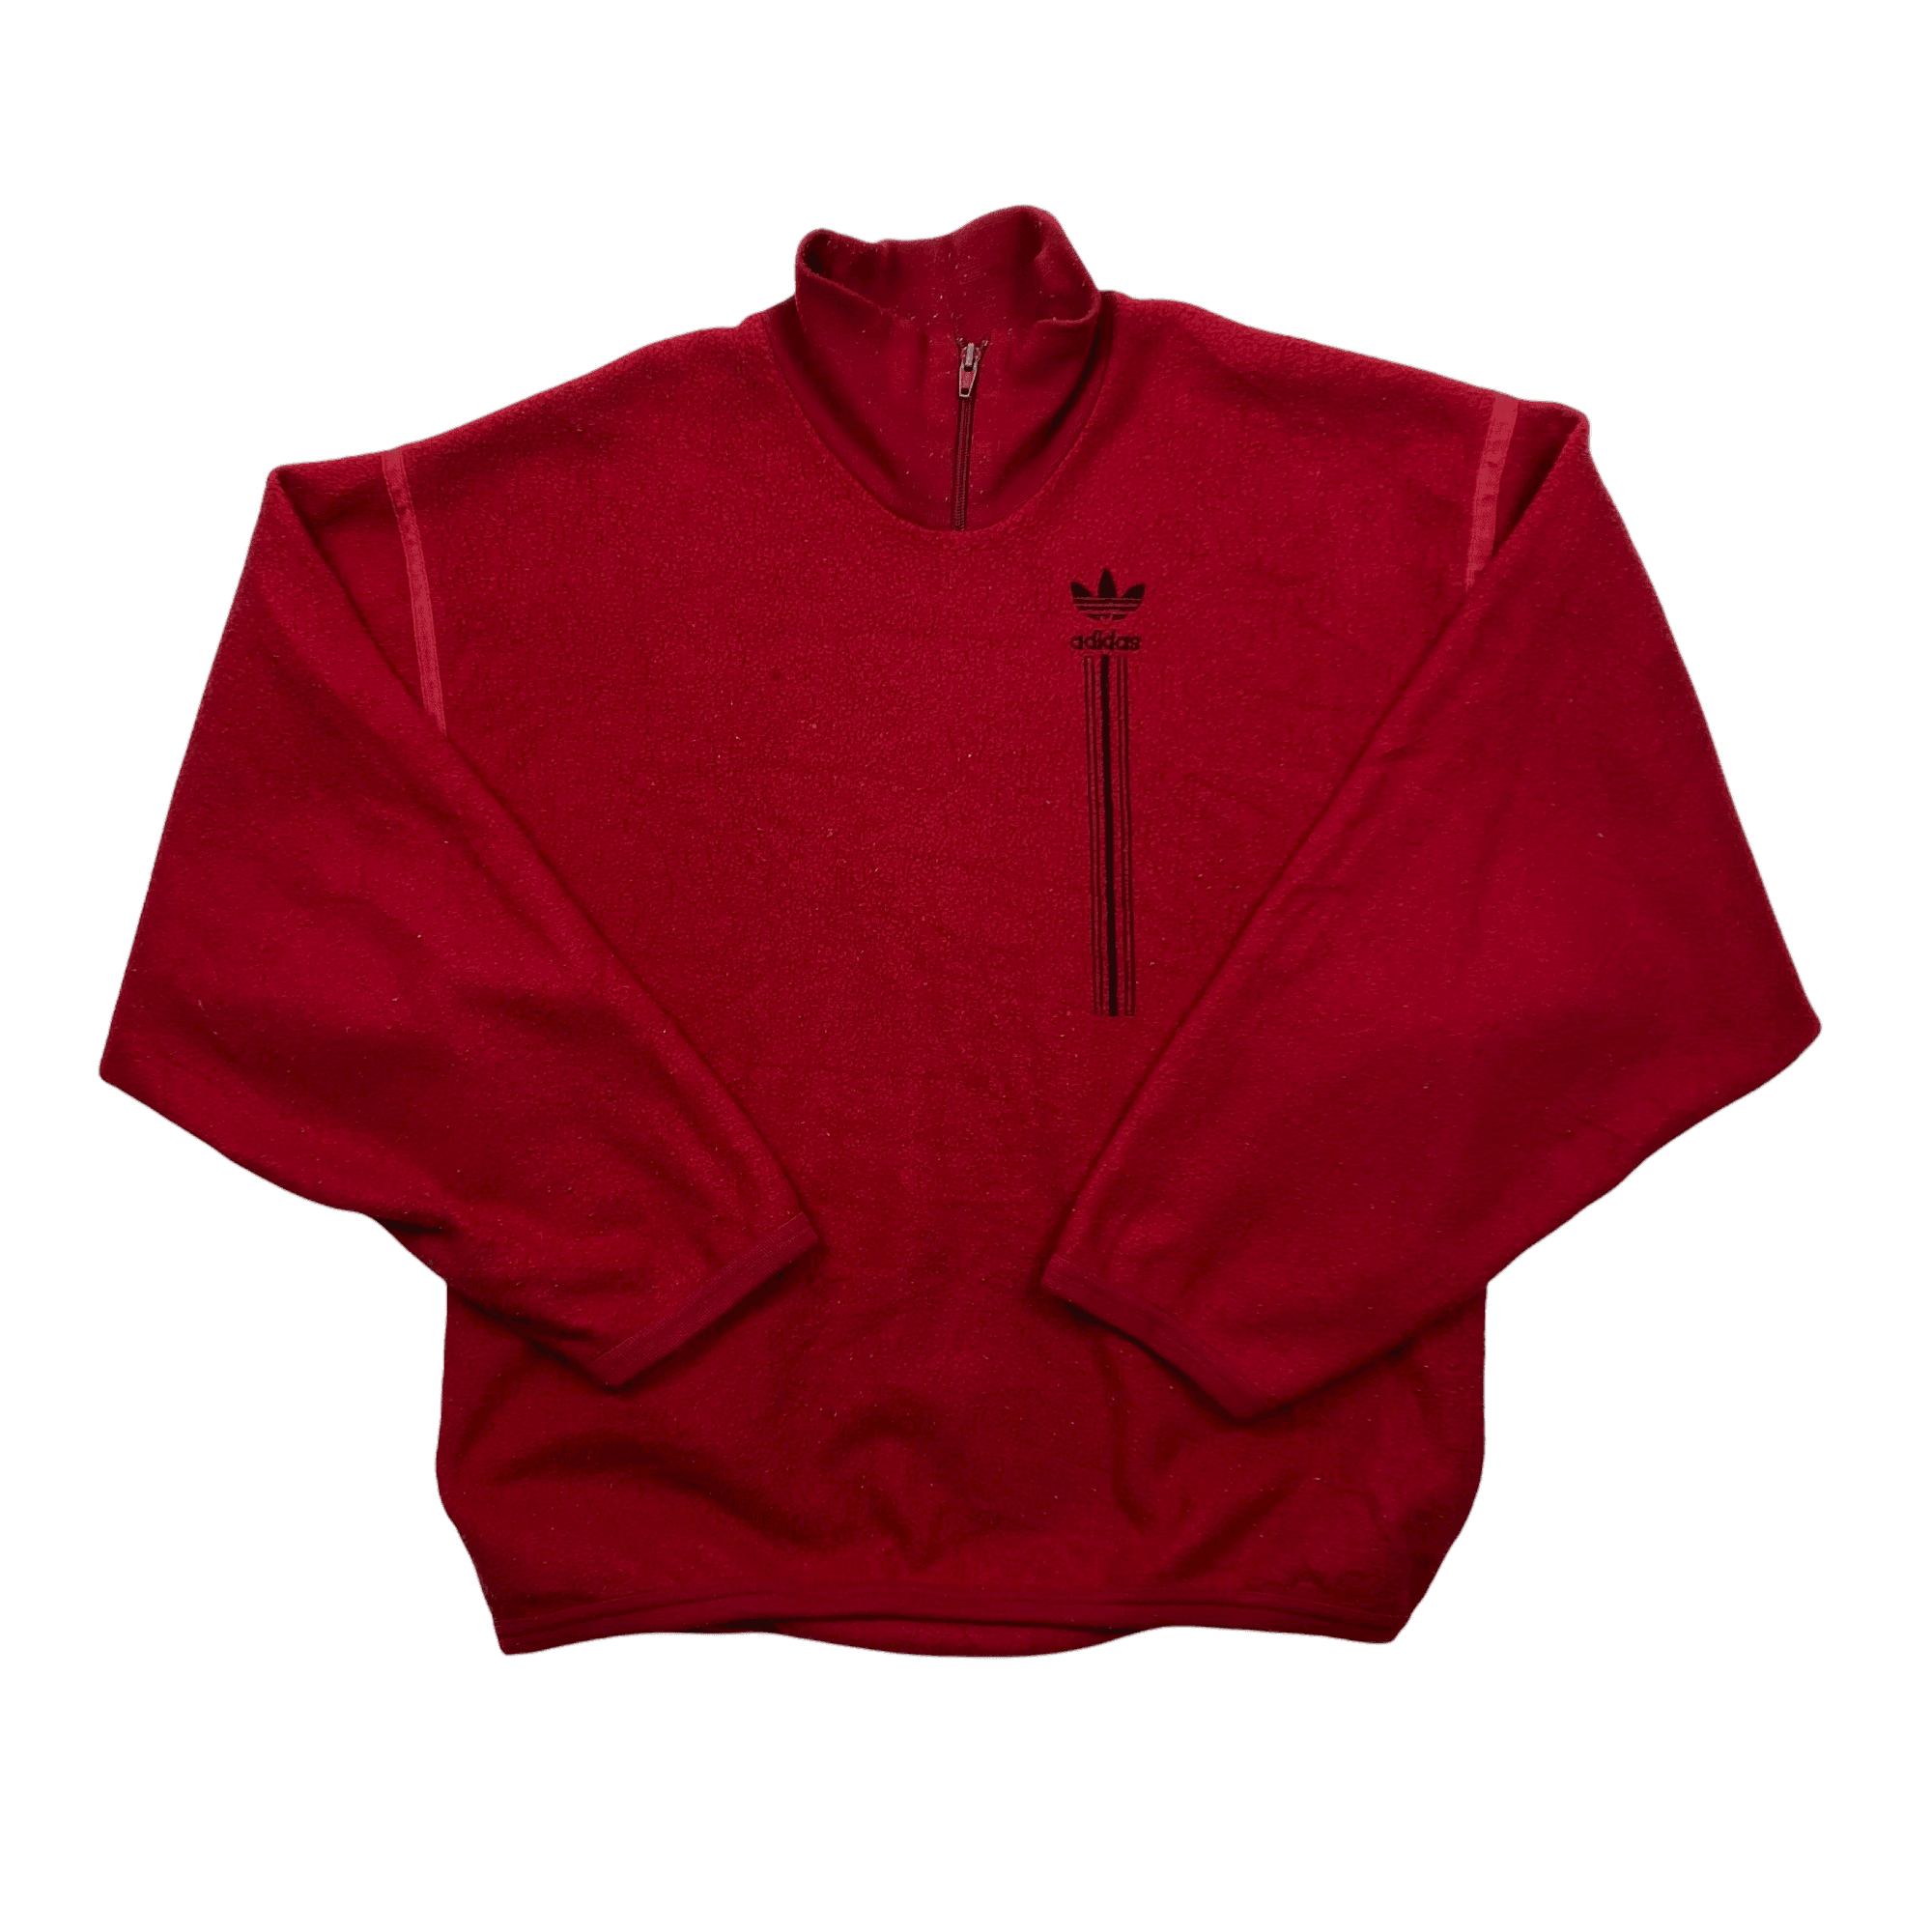 Vintage 90s Burgundy Adidas Spell-Out Quarter Zip Fleece Sweatshirt - Medium - The Streetwear Studio